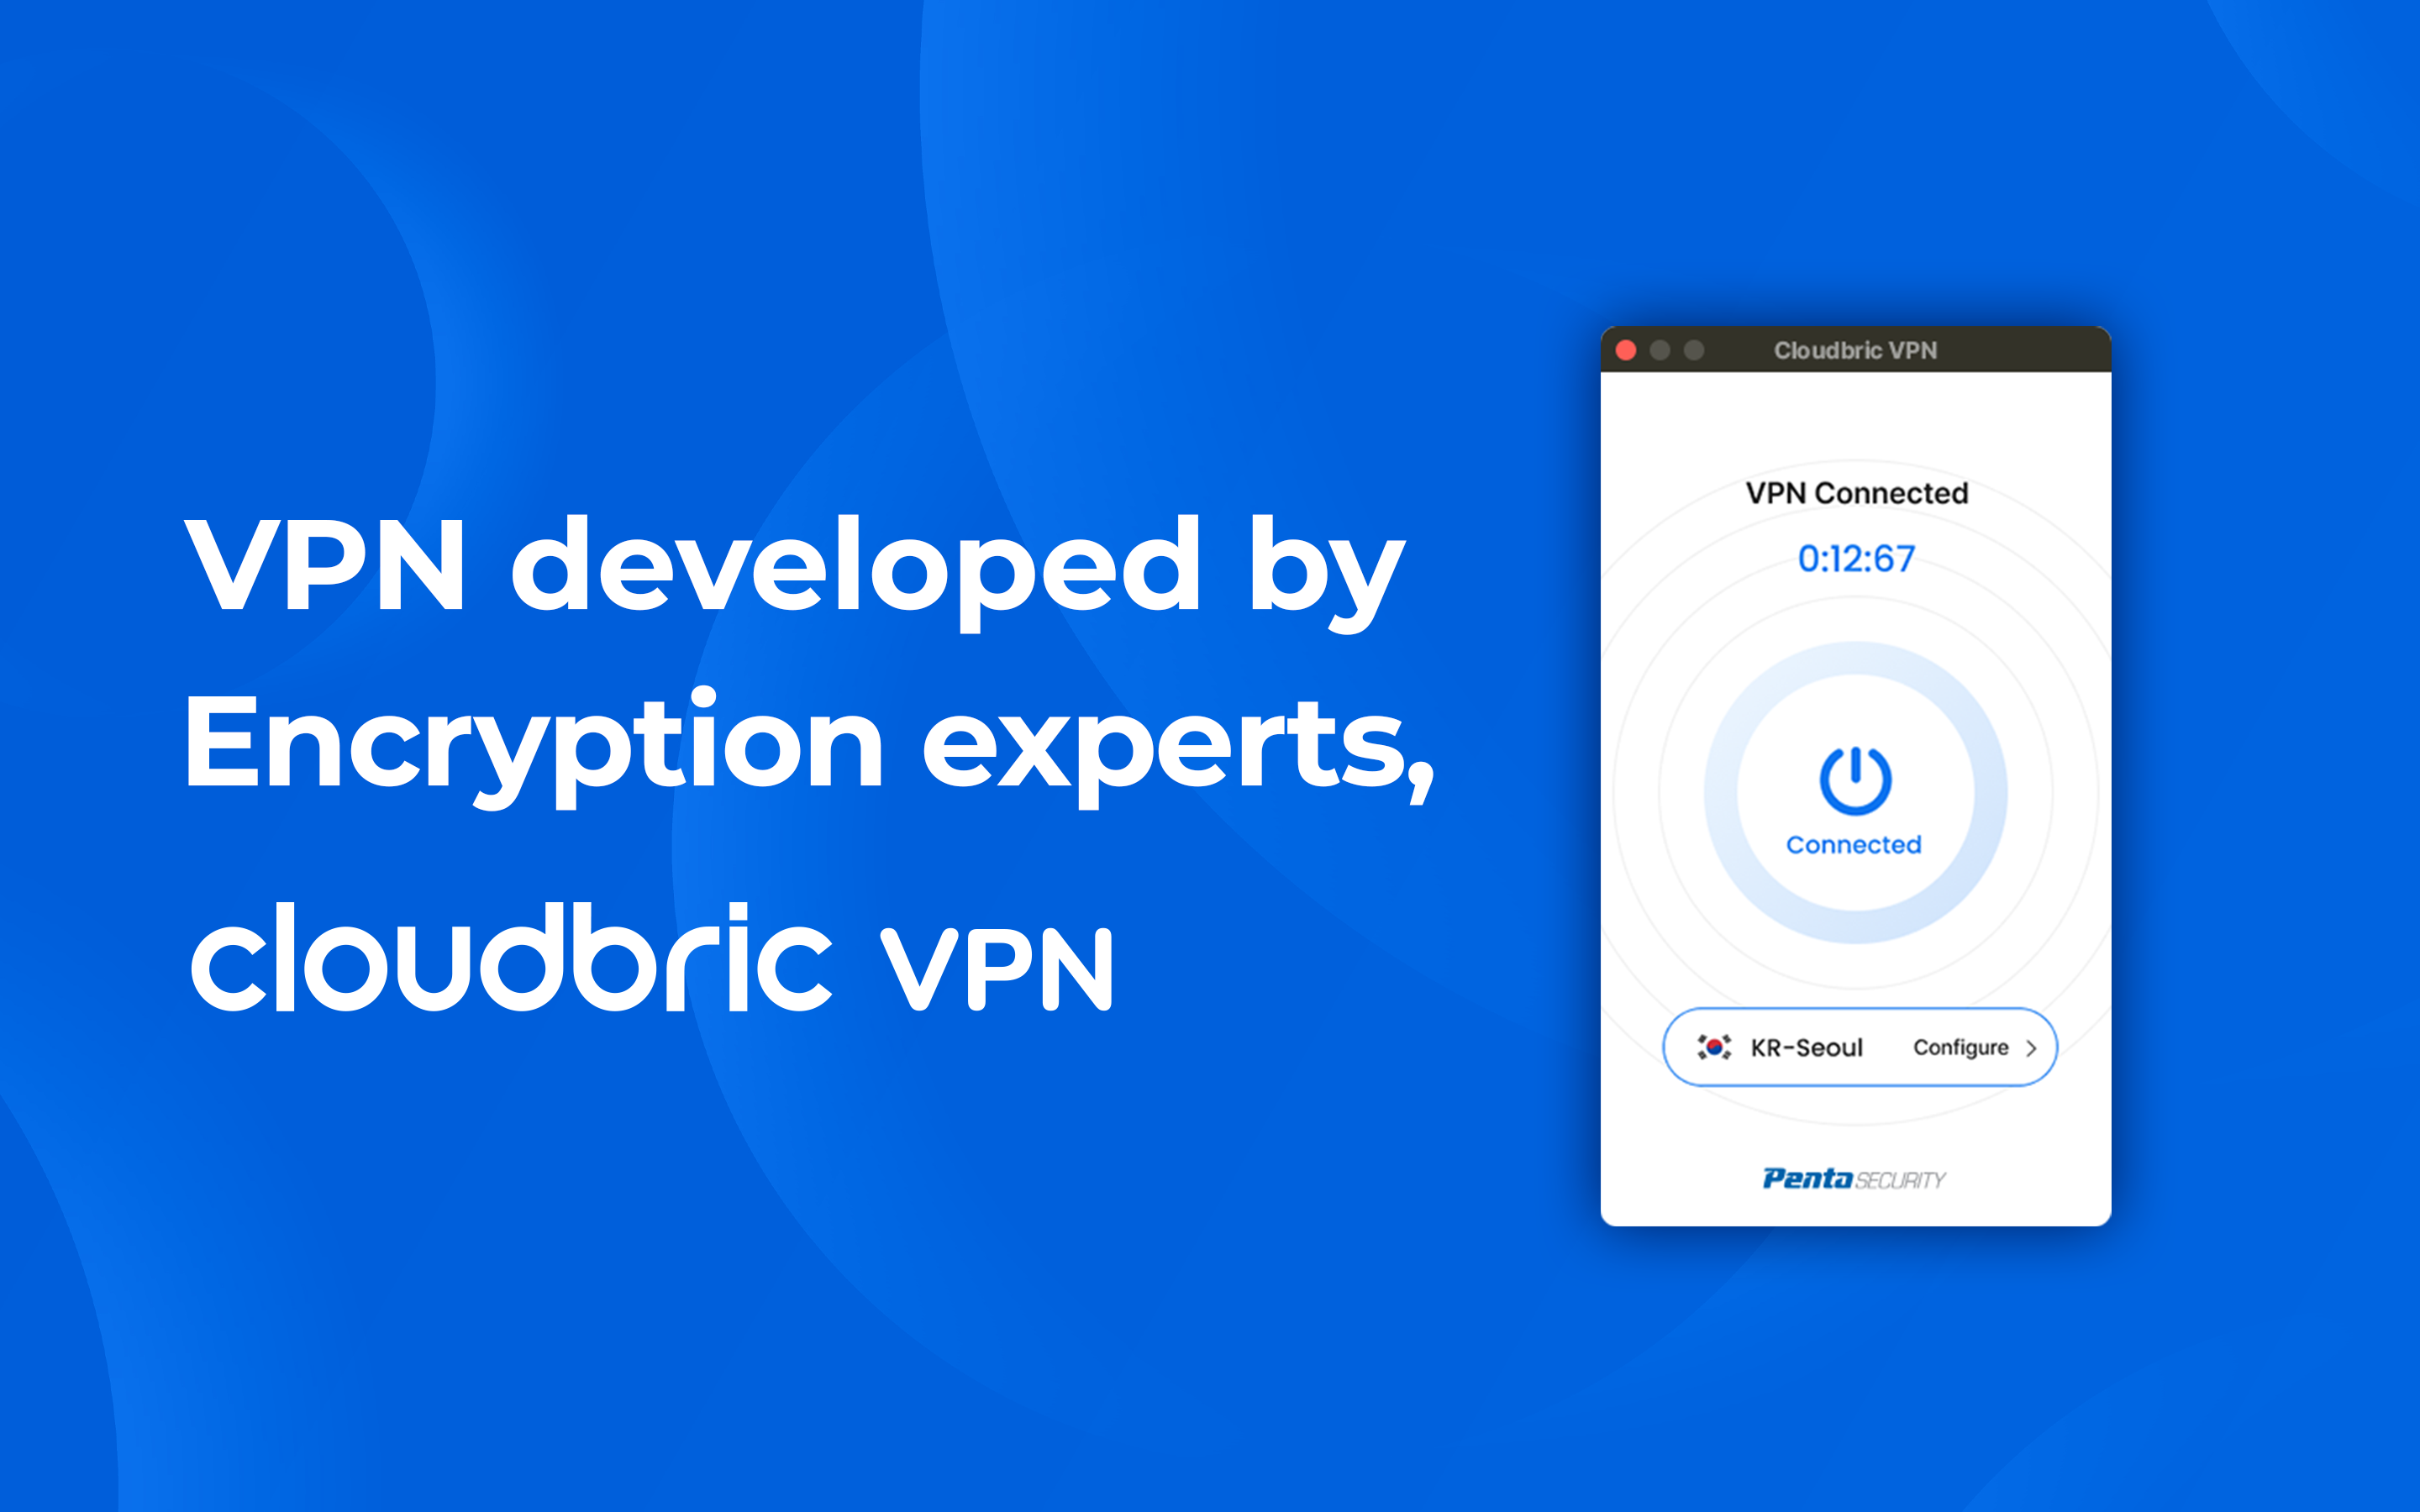 Cloudbric VPN, VPN developed by Encryption experts, Cloudbric, Penta Security